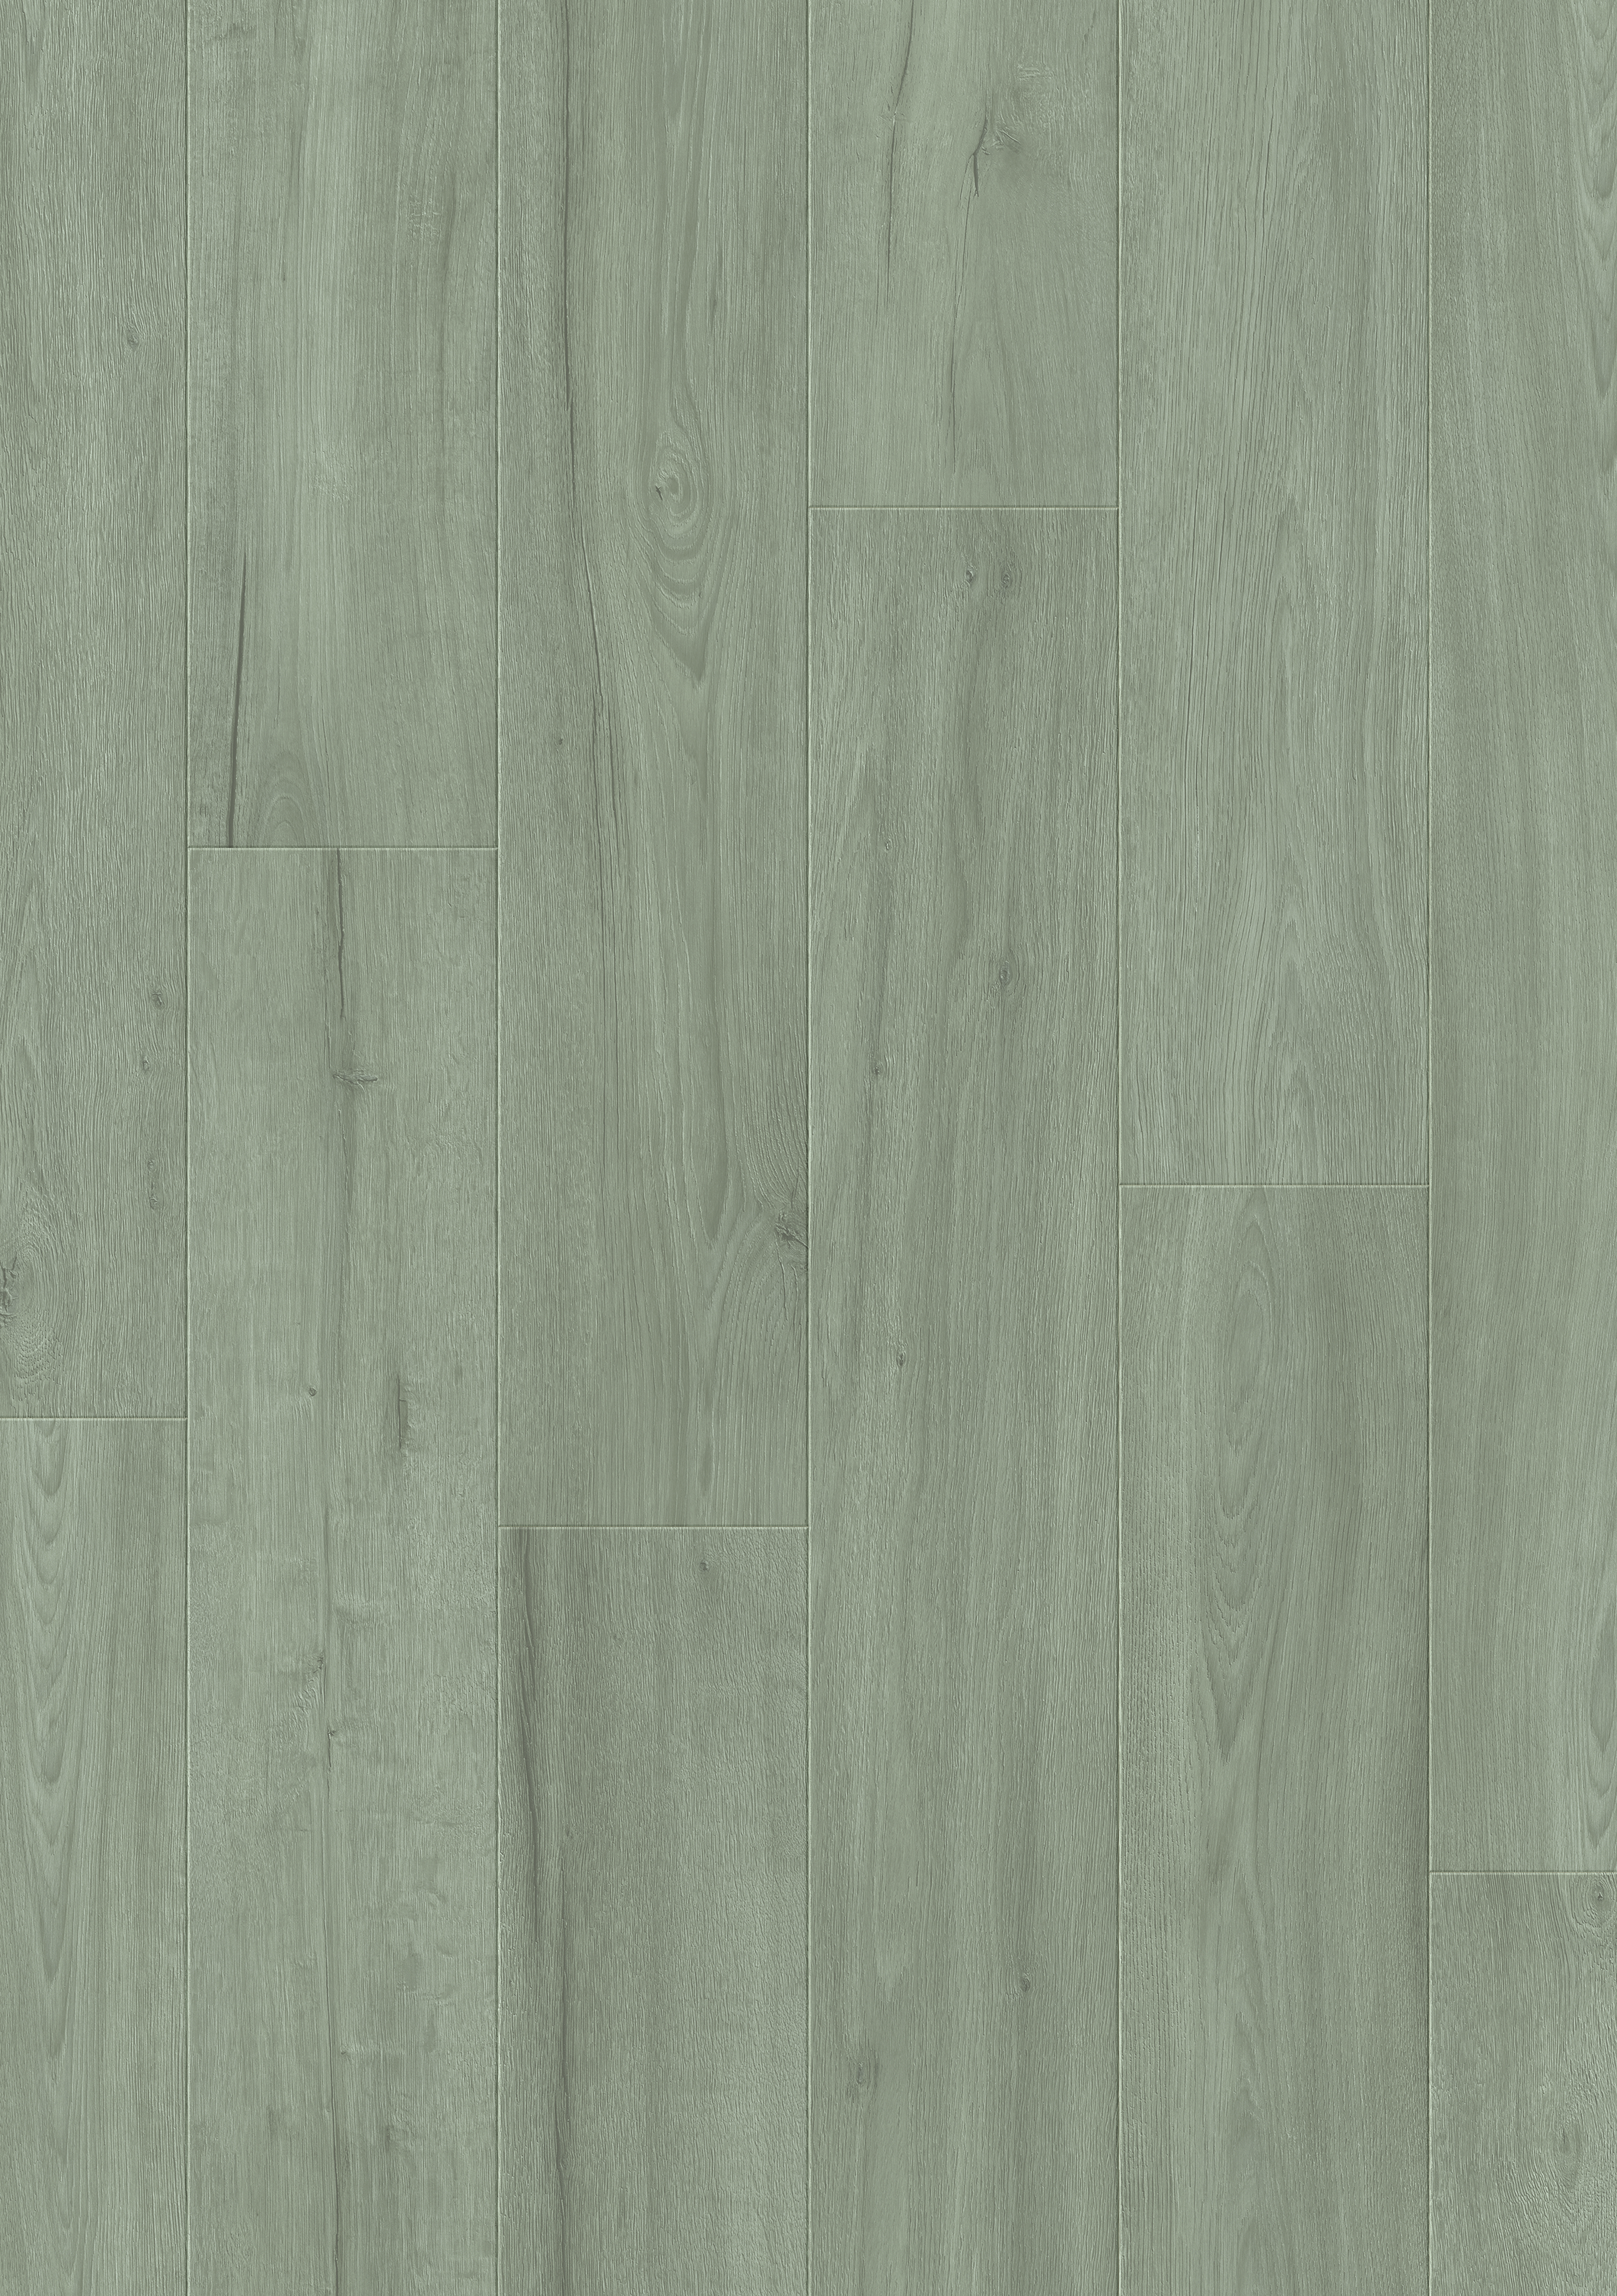 Quick-Step Salto Sterling Grey Oak 12mm Laminate Flooring - Sample